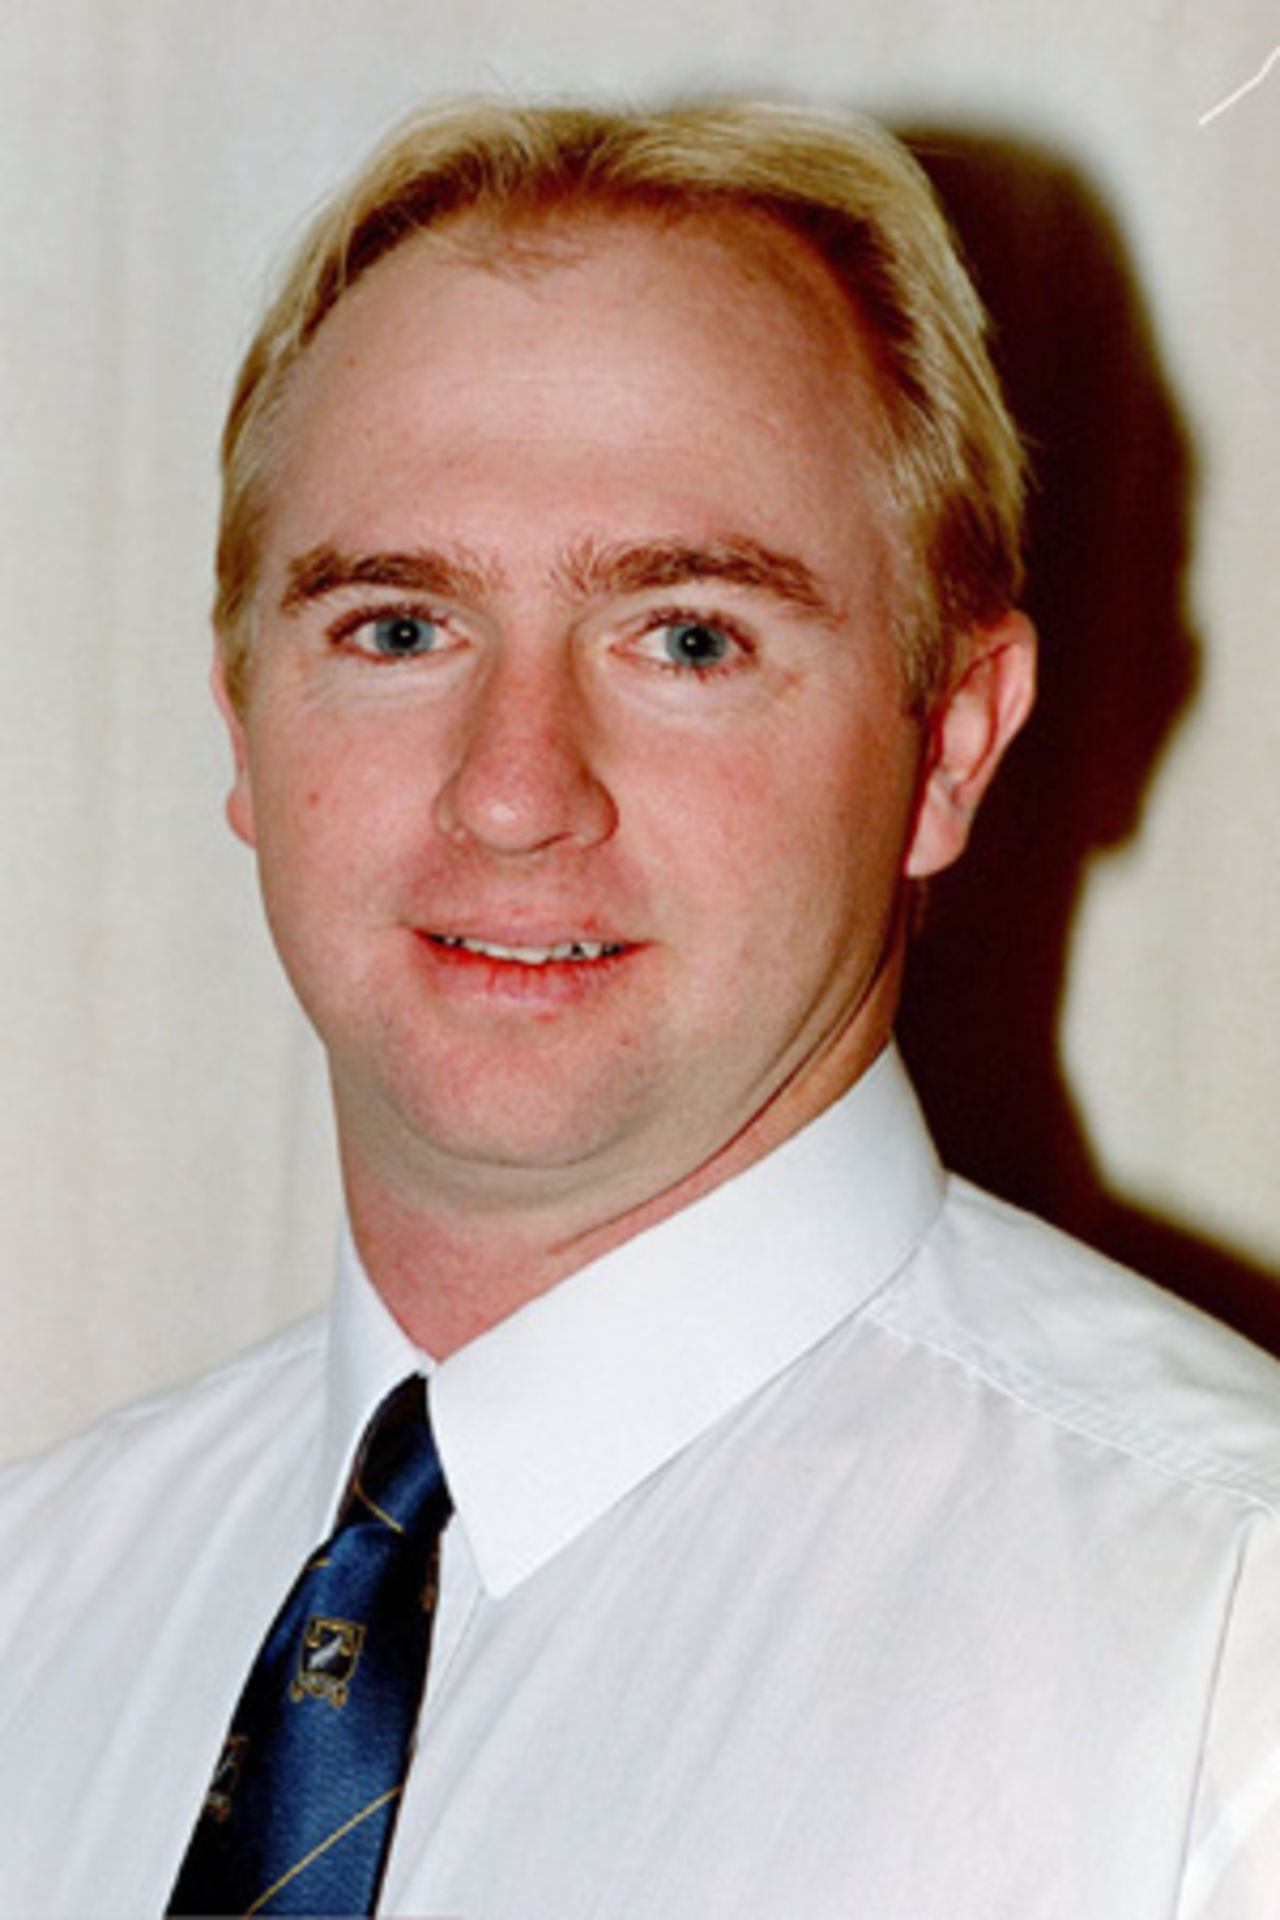 Portrait of Wayne Knights, New Zealand reserve panel umpire in the 2002/03 season.